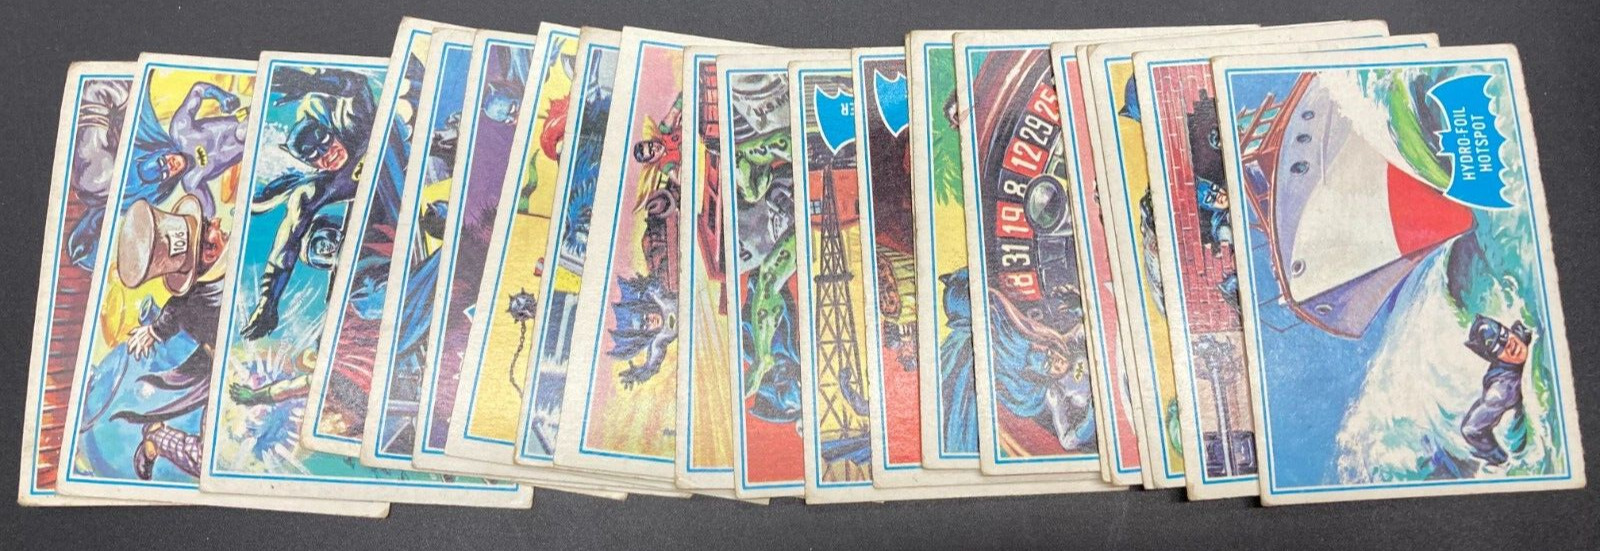 1966 Topps Batman (Blue Bat) Card Lot of 23 cards Bat Back